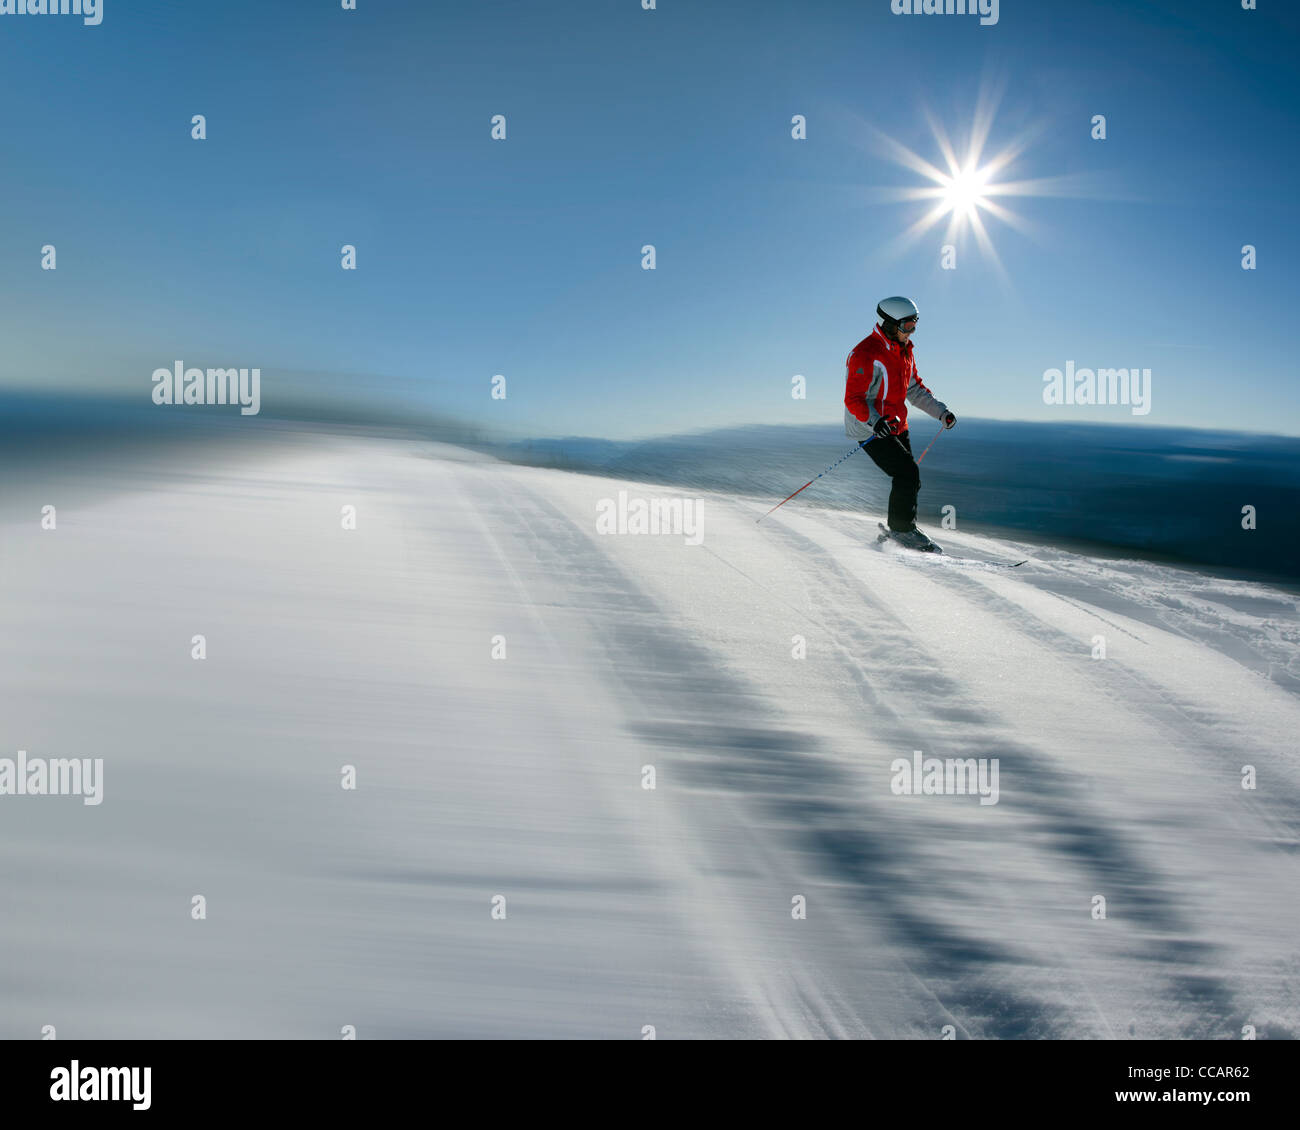 SPORT: Downhill Skiing Stock Photo